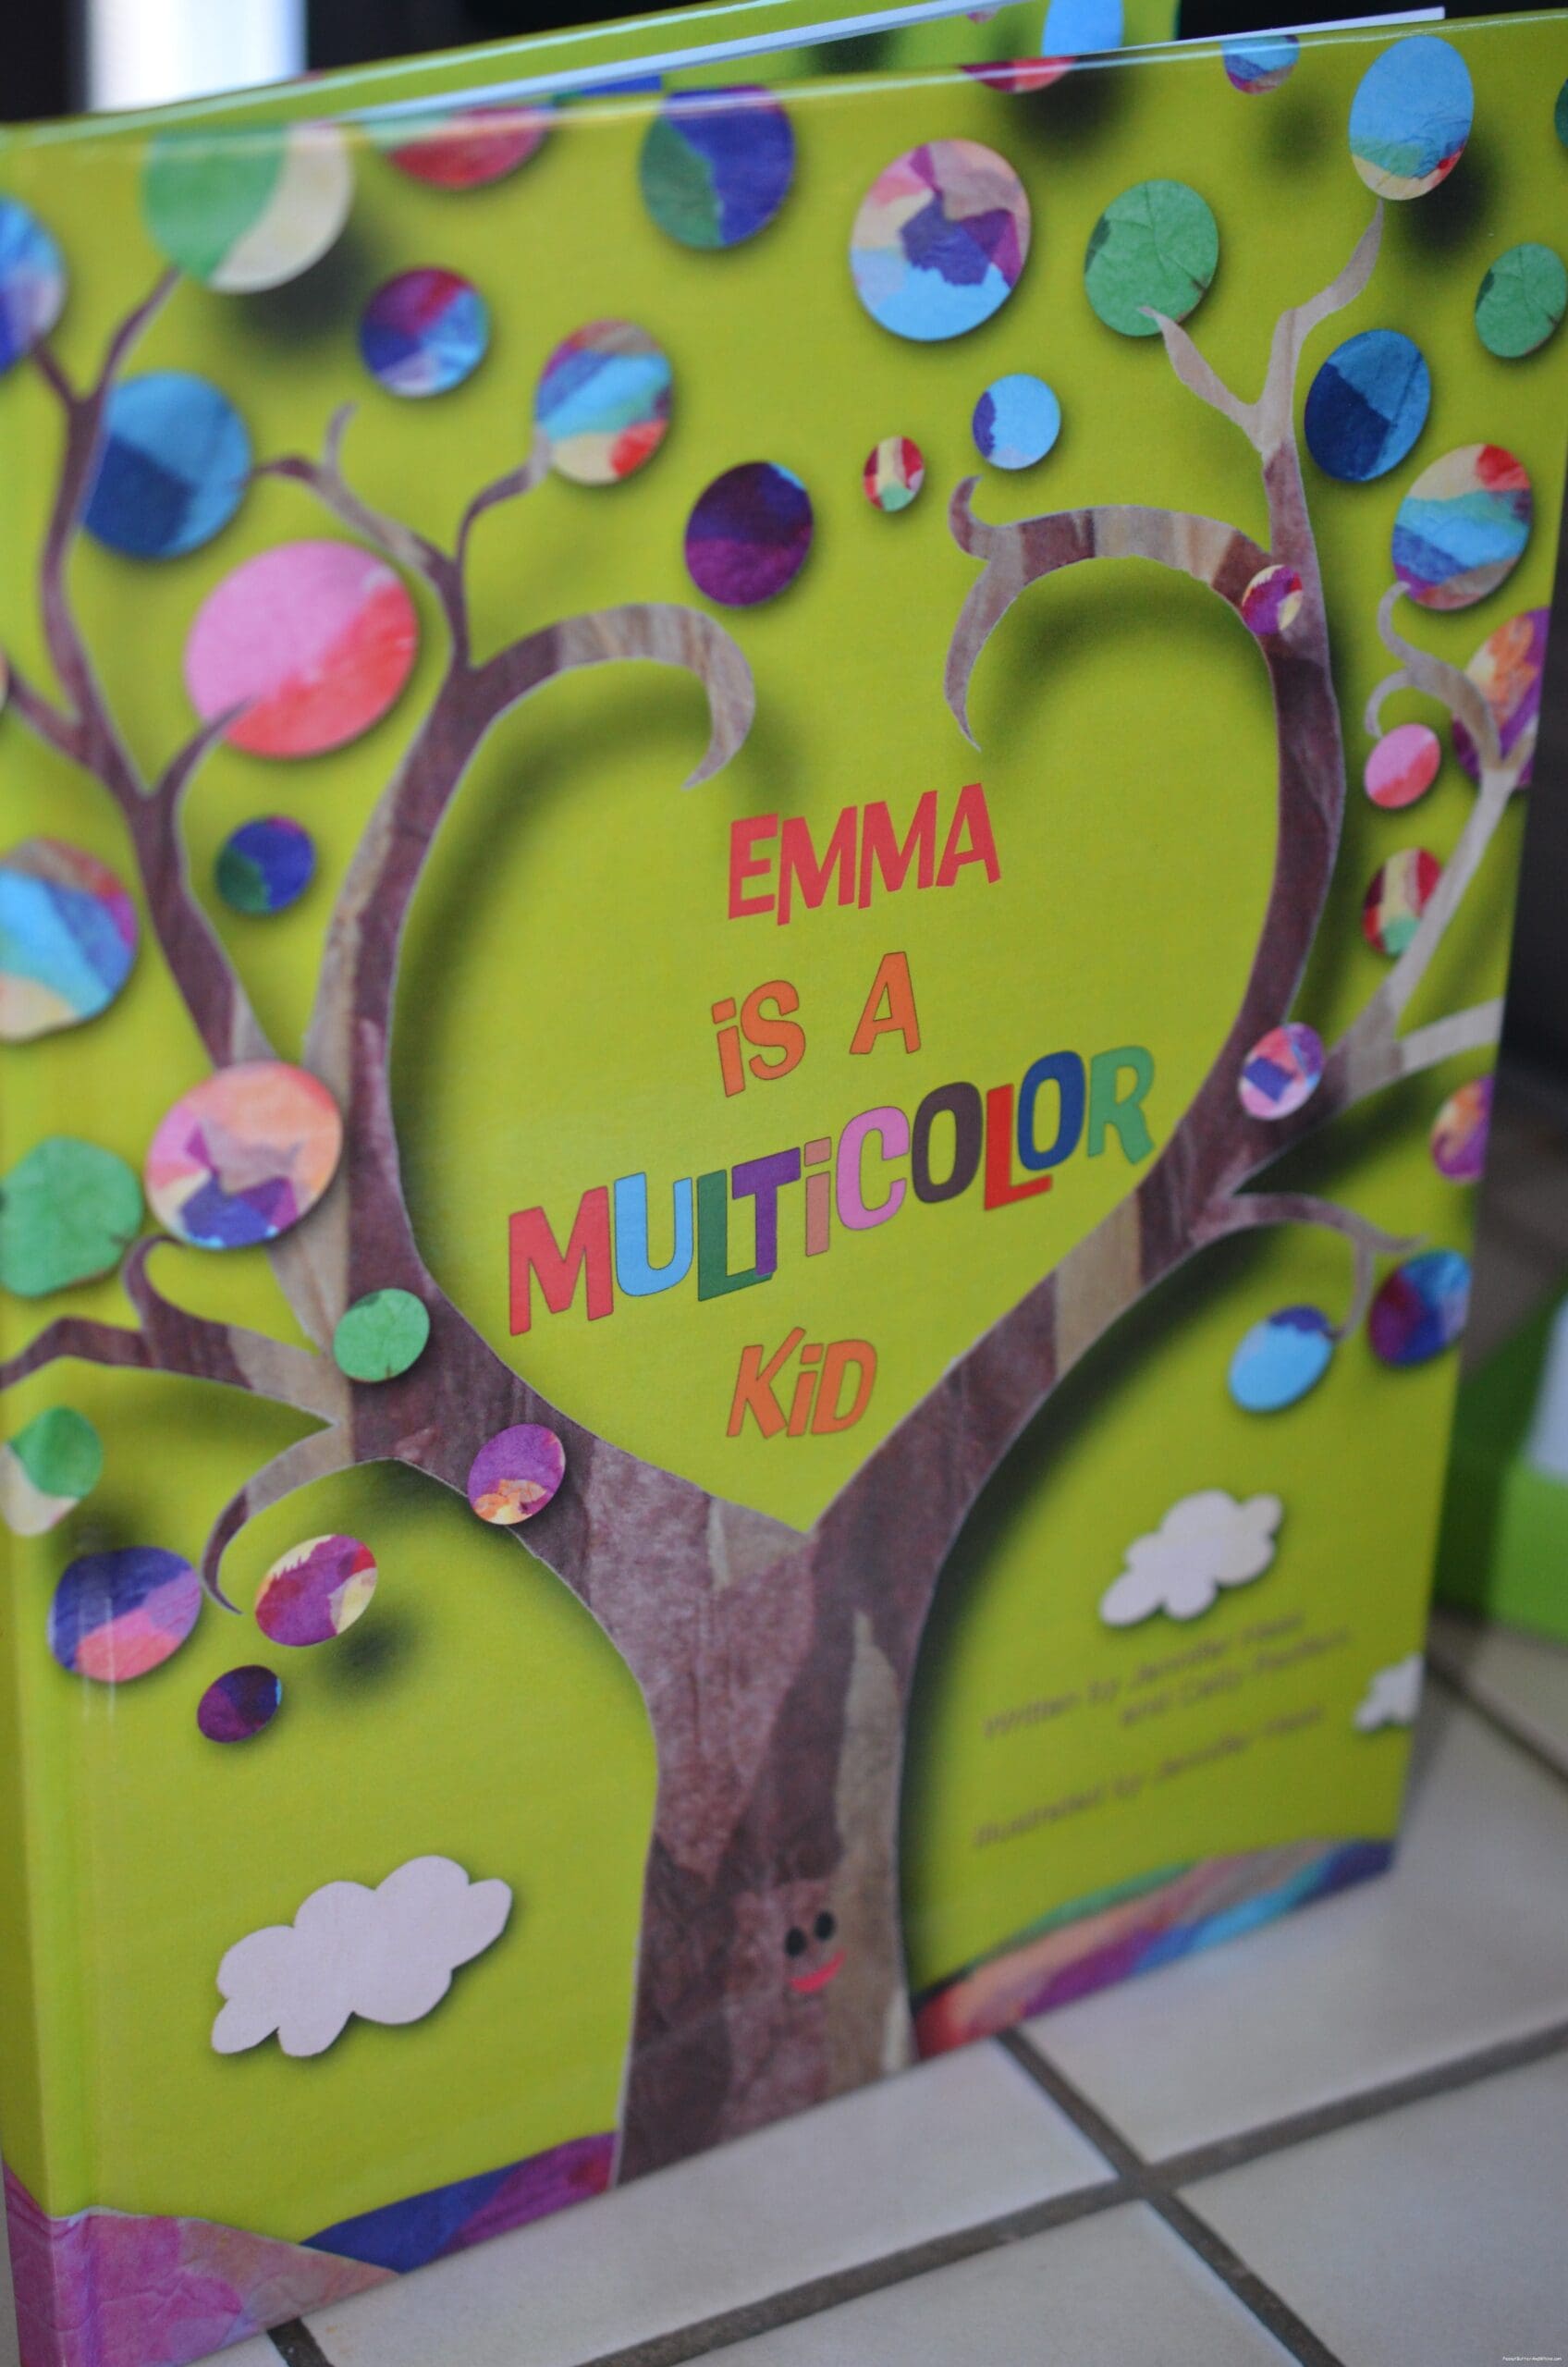 Multicolor kid book